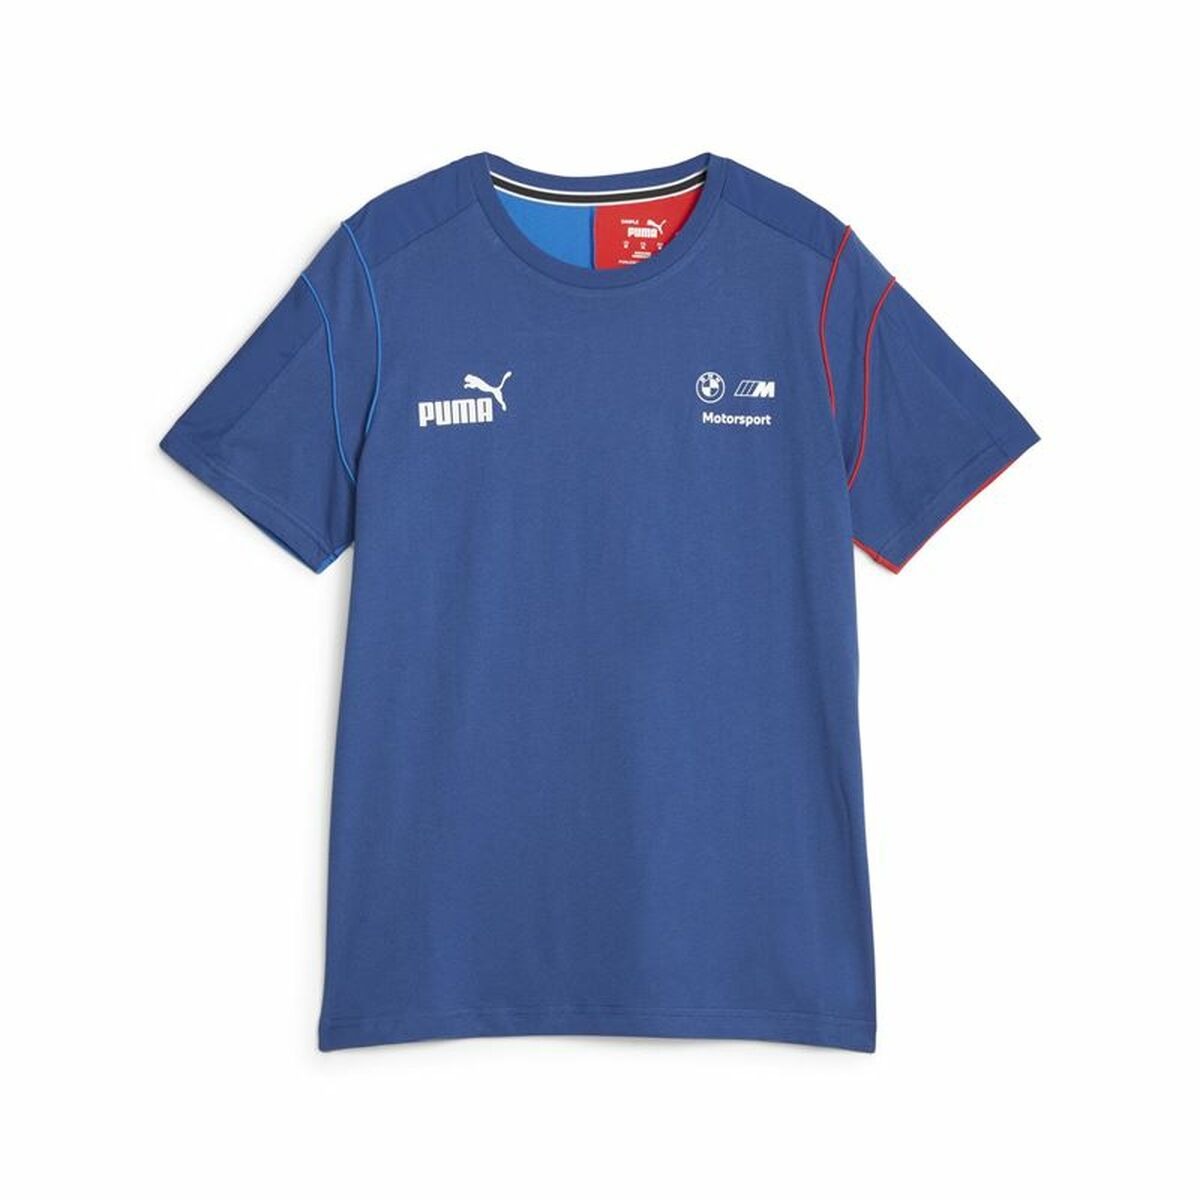 Kaufe Herren Kurzarm-T-Shirt Puma Bmw Mms Mt7 Blau bei AWK Flagship um € 60.00